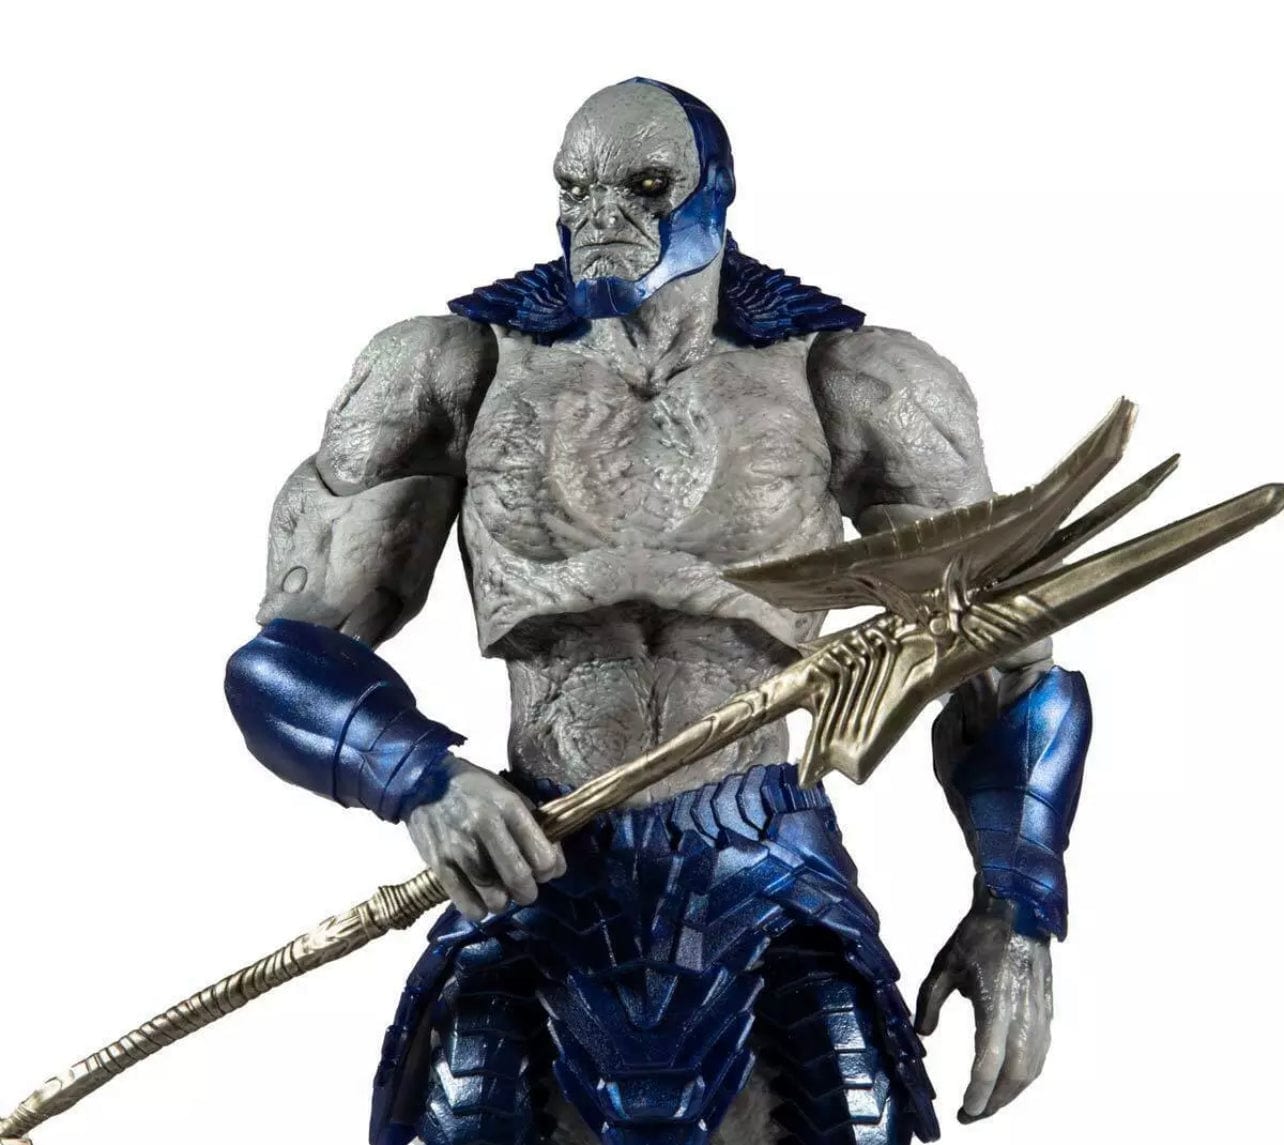 DC Multiverse McFarlane Toys 10" Action Figure - Justice League Movie - Darkseid